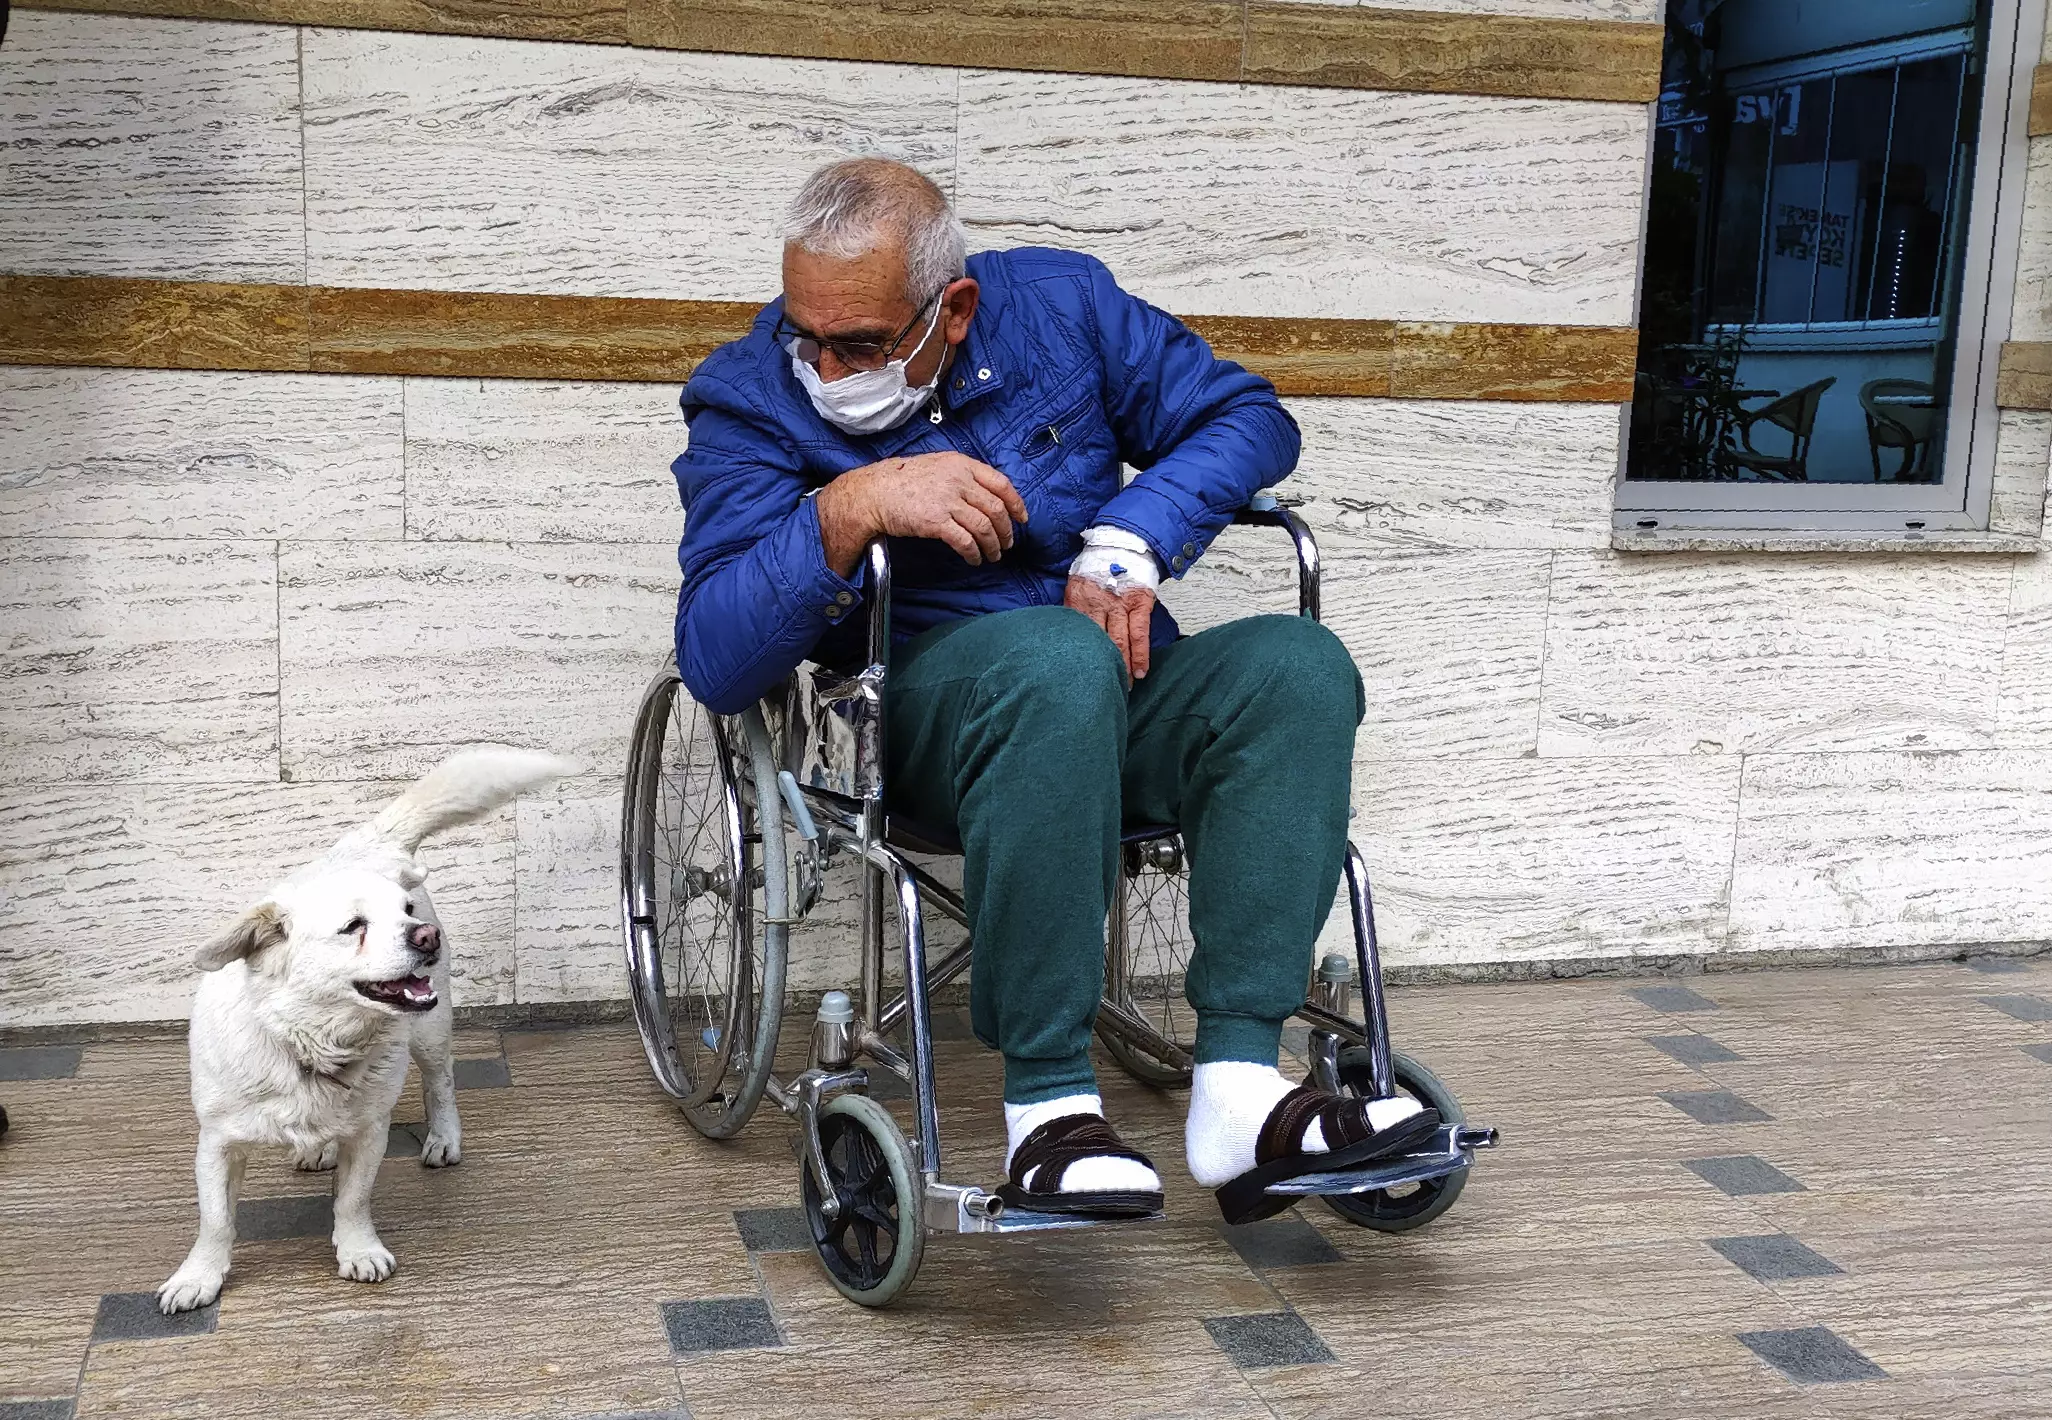 Cemal Senturk was reunited with his dog Boncuk (